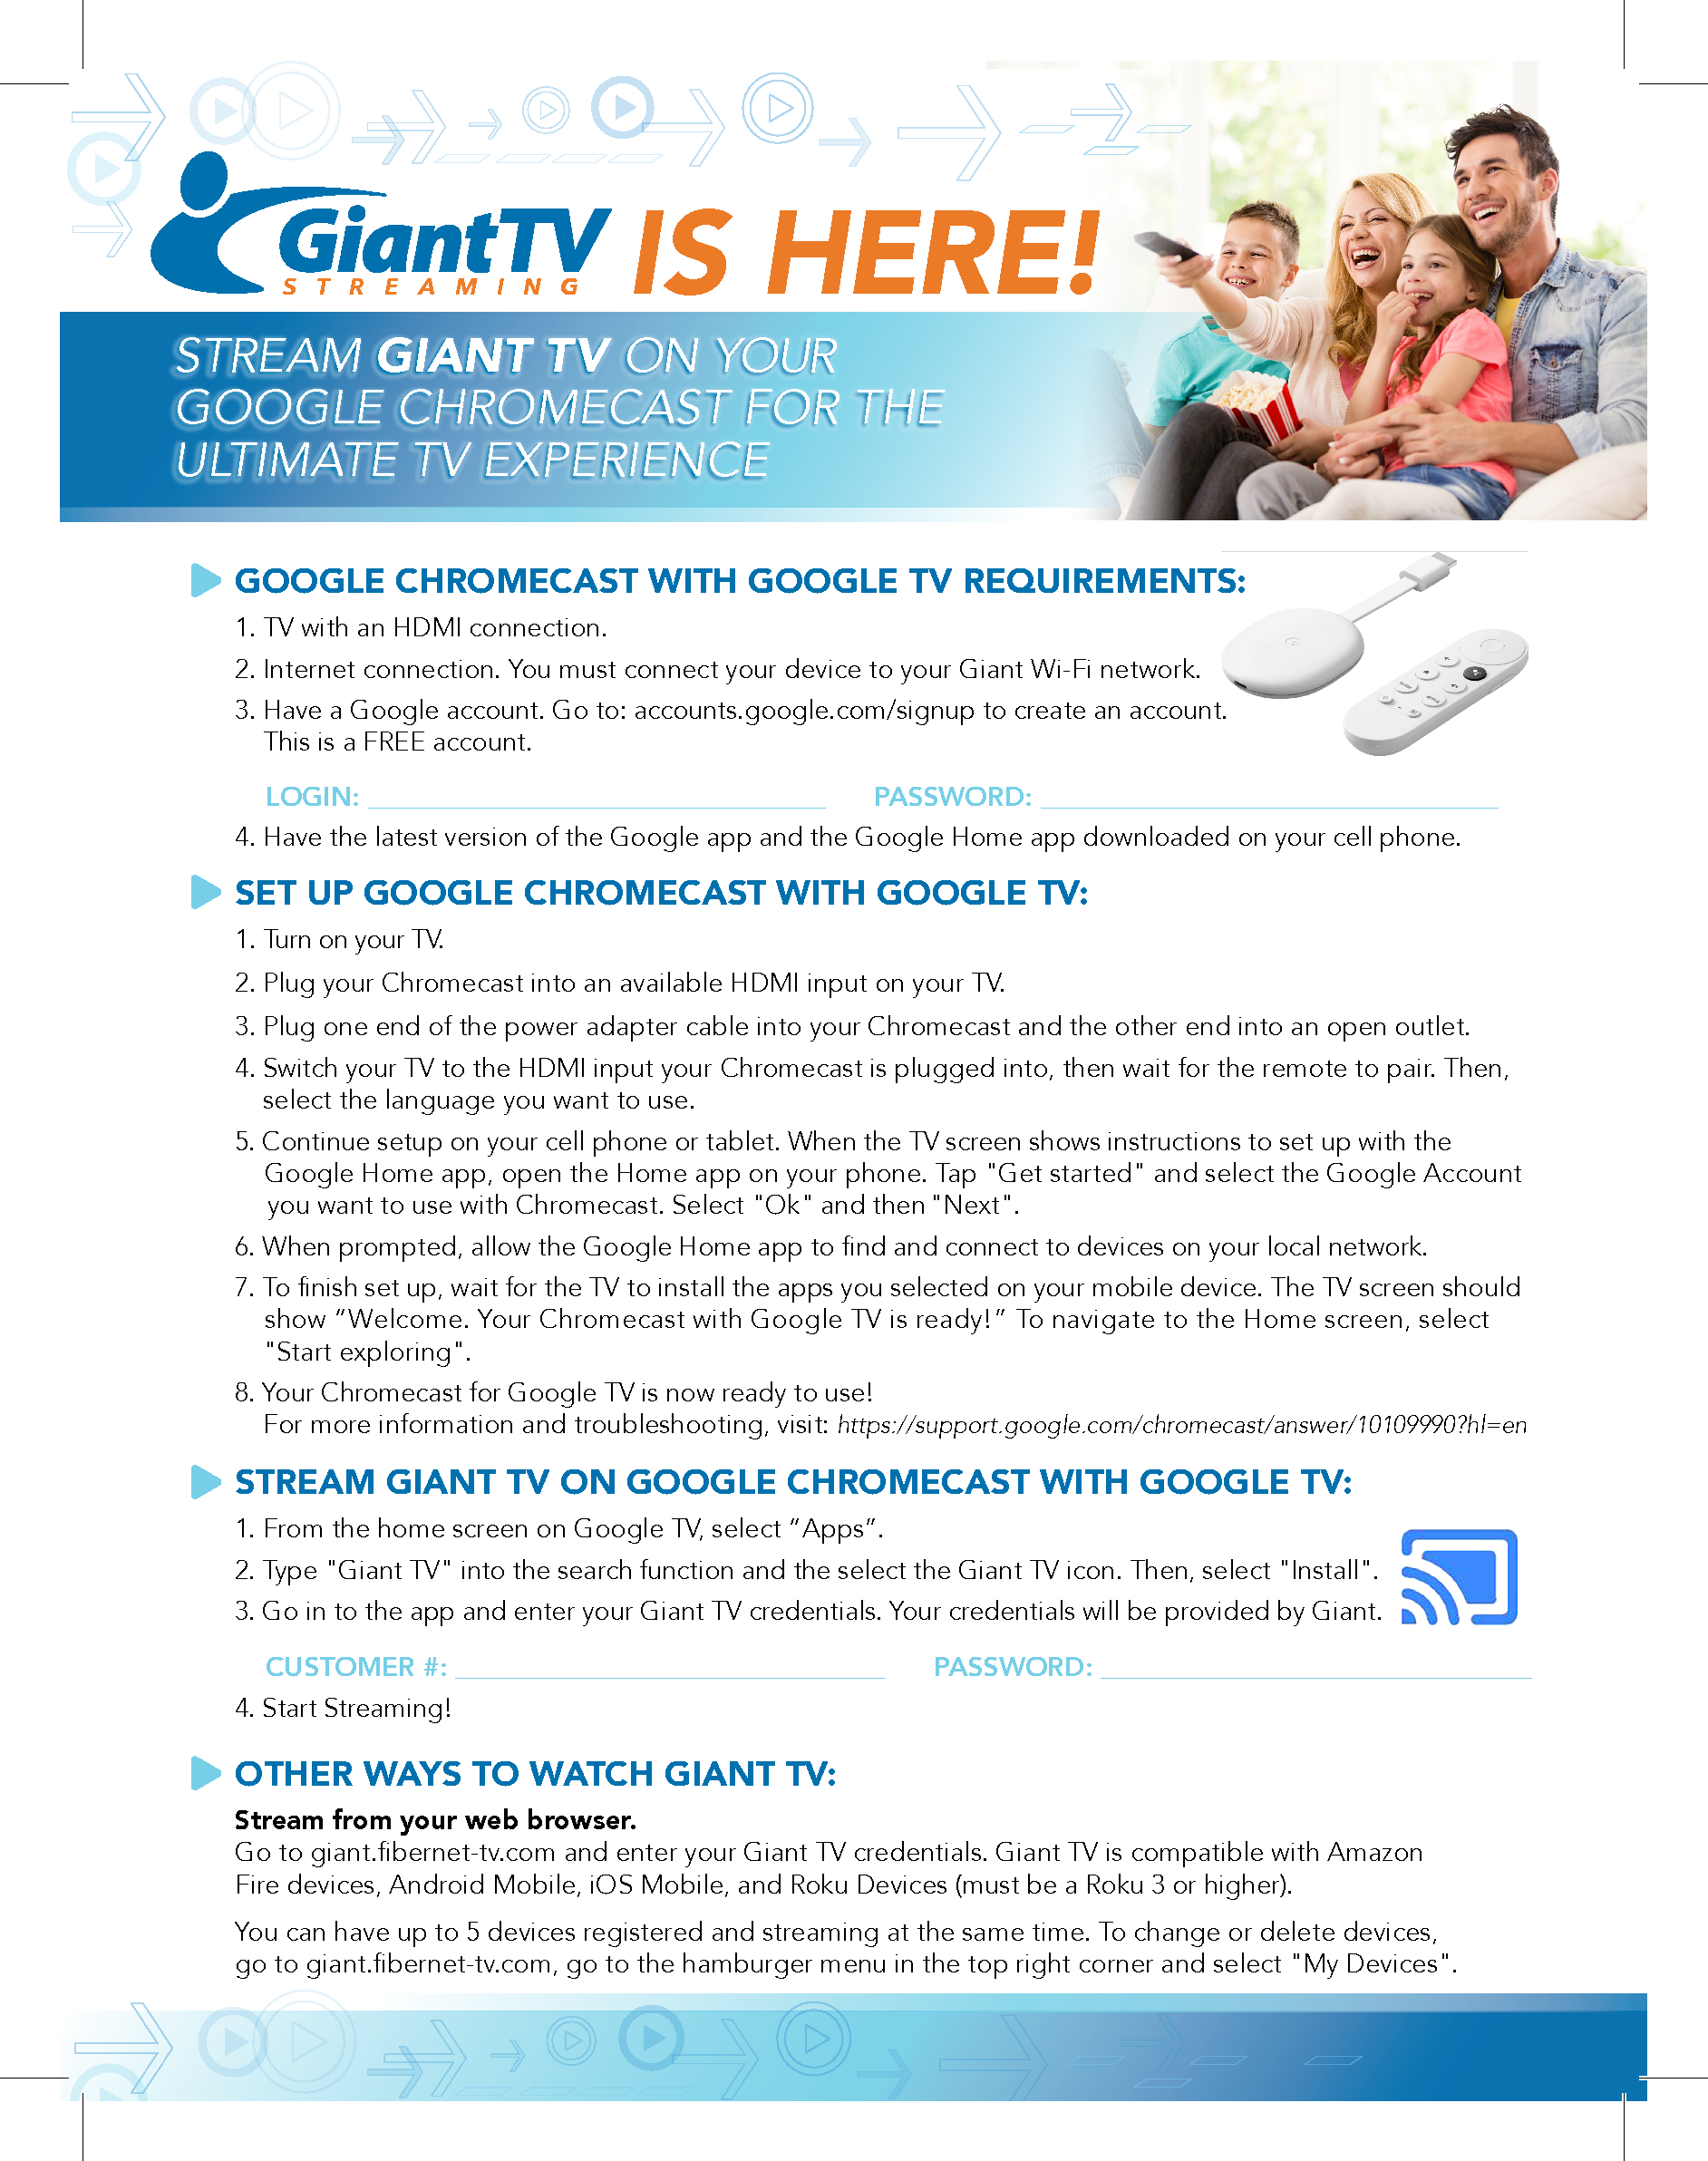 GiantTV_Google_Chromecast_Installation_Guide_4-11-22.png